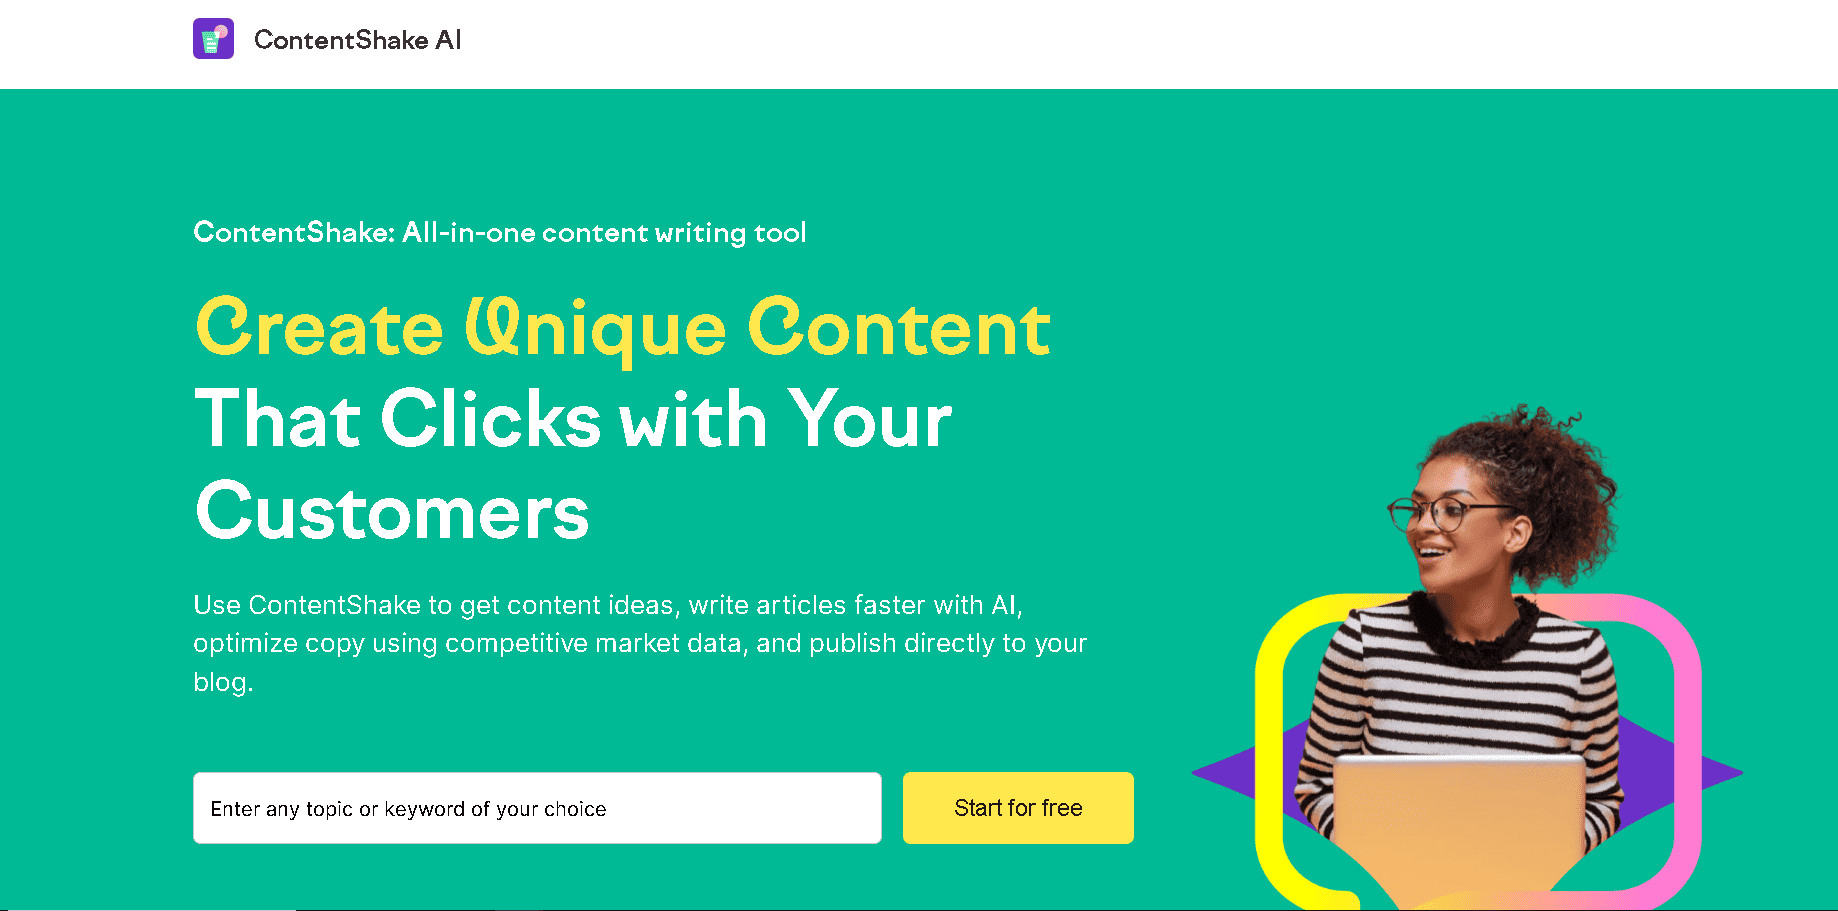 ContentShake AI by SEMrush